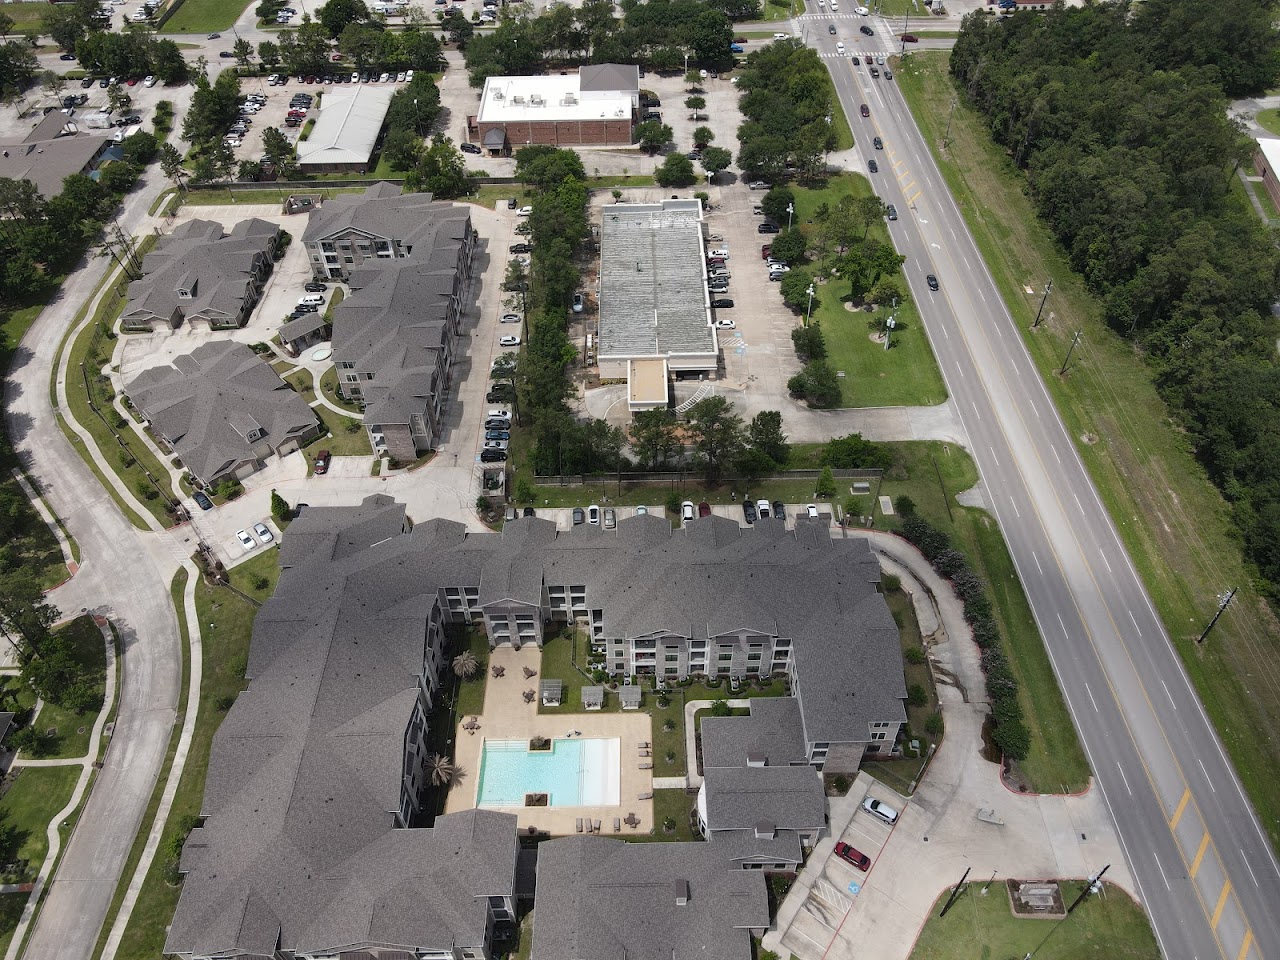 Photo of RIVERBROOK VILLAGE. Affordable housing located at 5450 ATASCOCITA ROAD HUMBLE, TX 77346